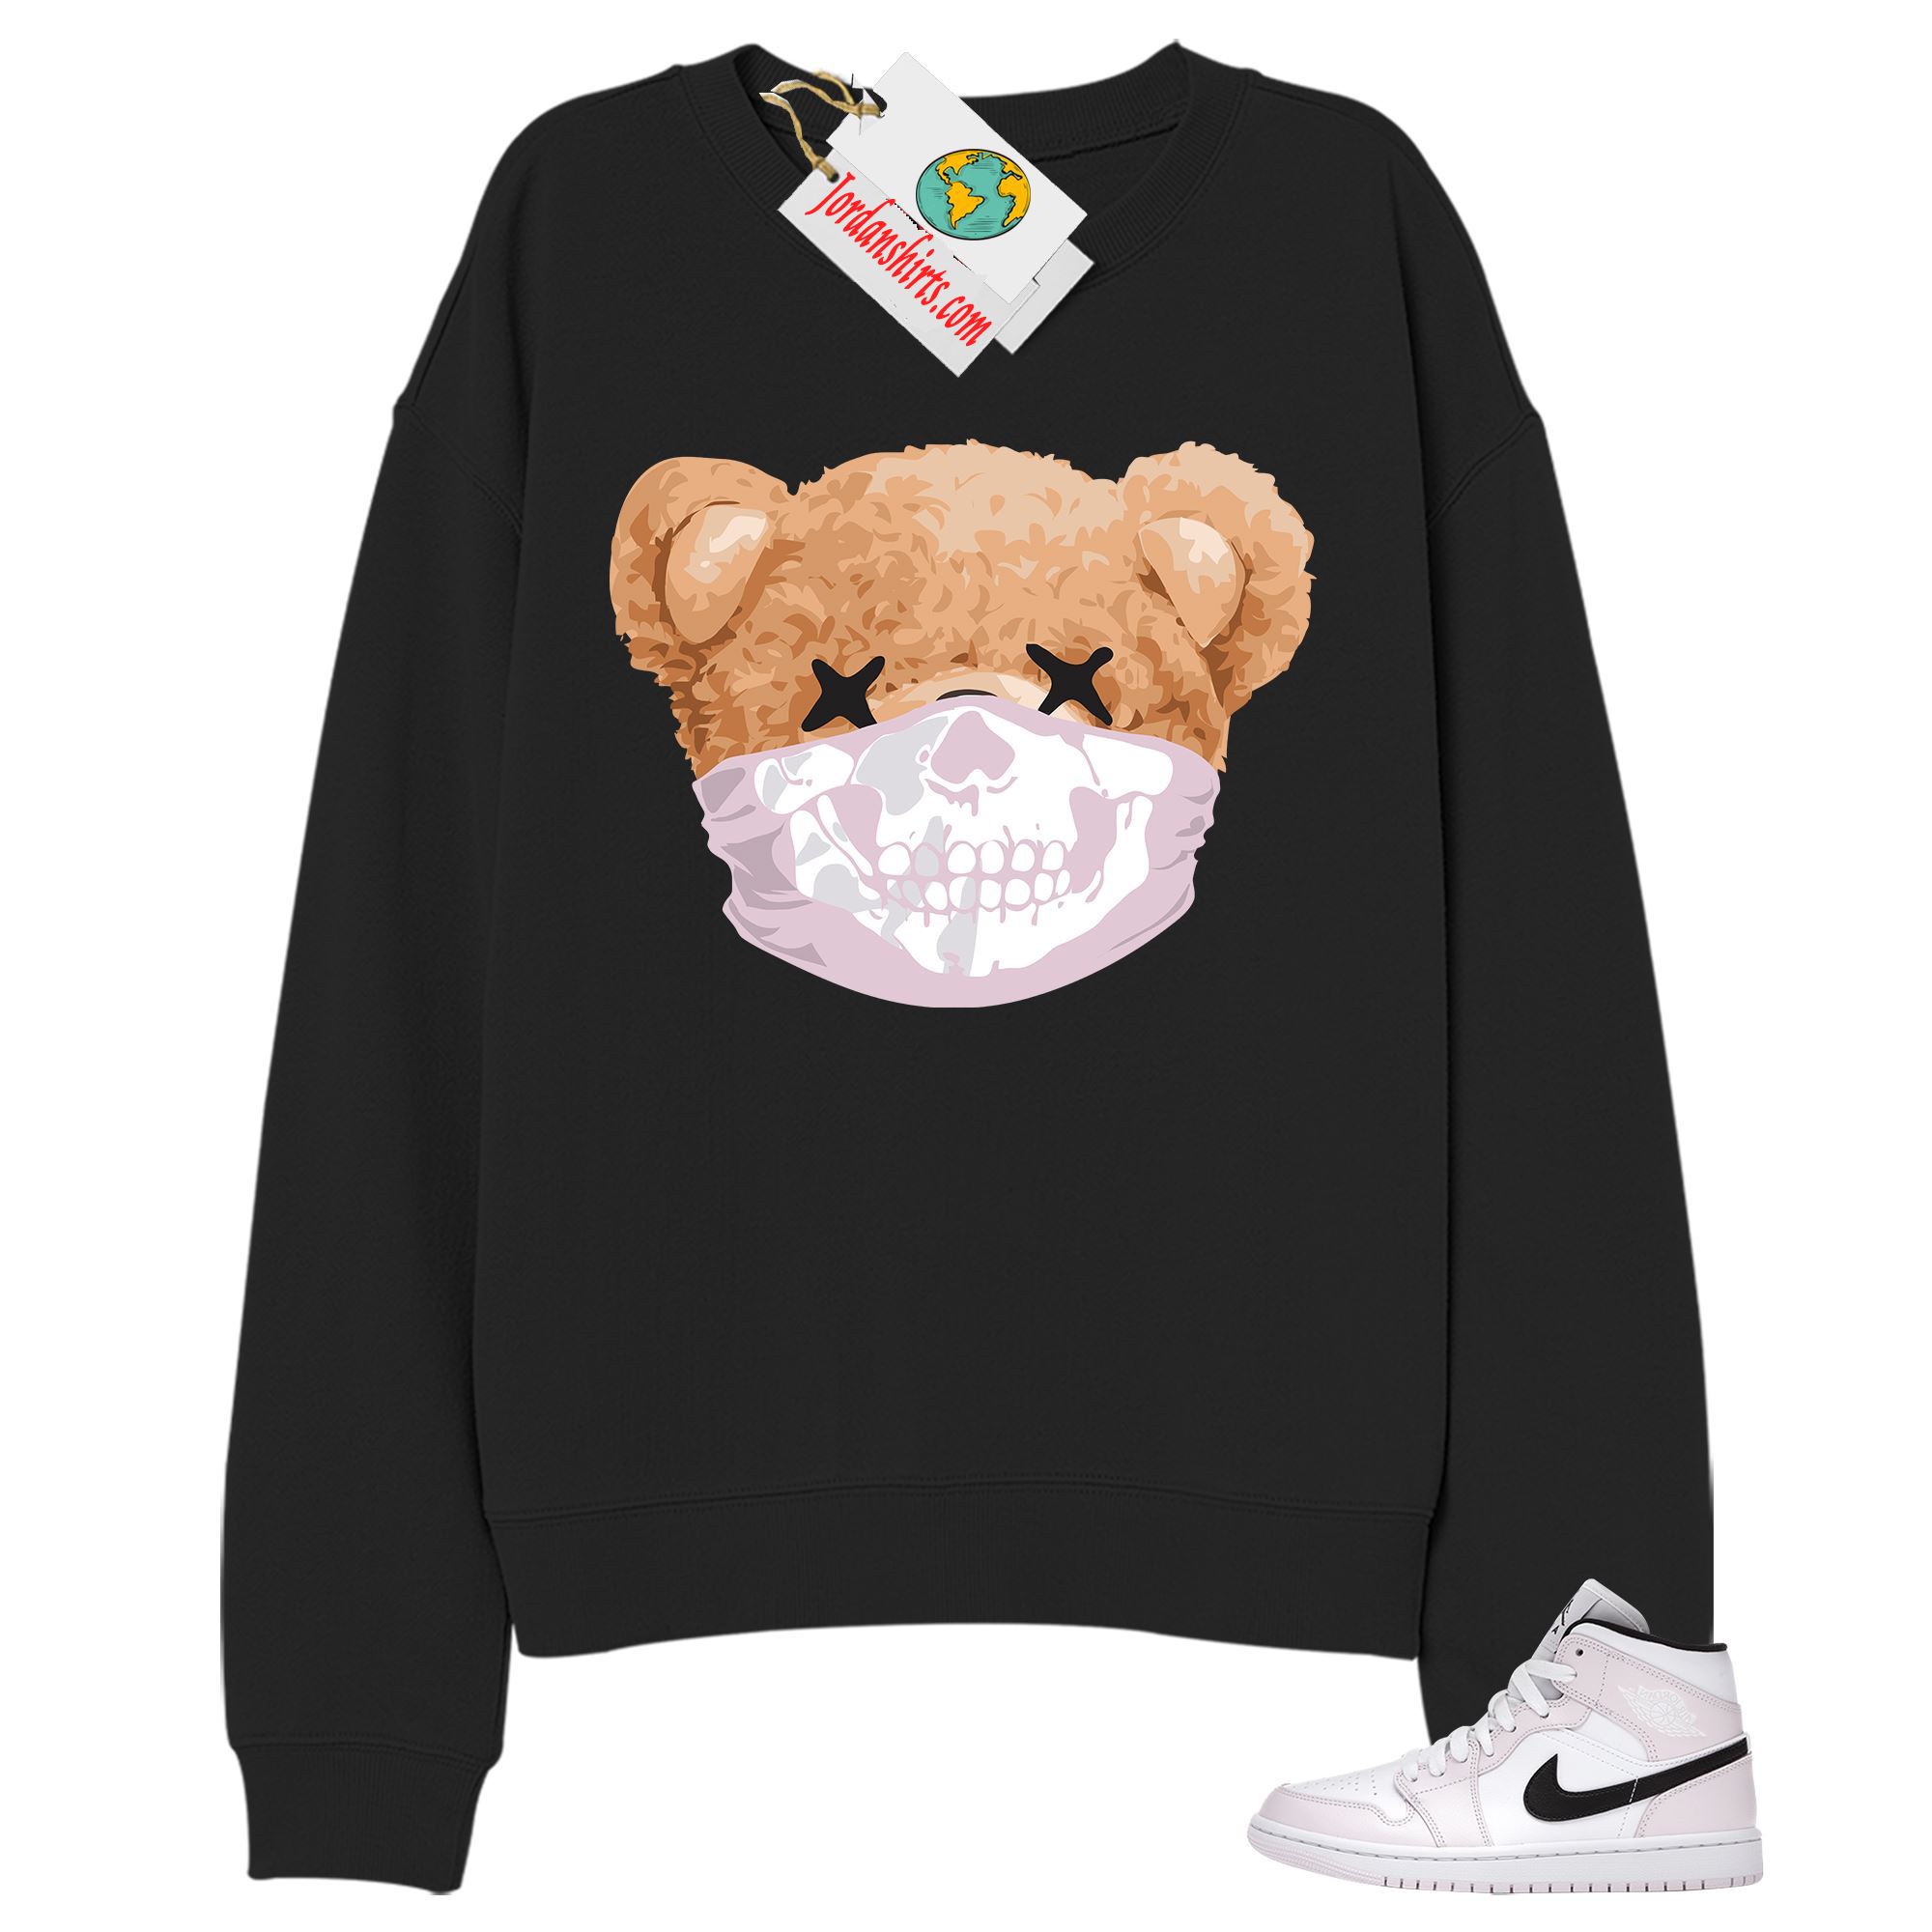 Jordan 1 Sweatshirt, Teddy Bear Skull Bandana Black Sweatshirt Air Jordan 1 Barely Rose 1s Full Size Up To 5xl